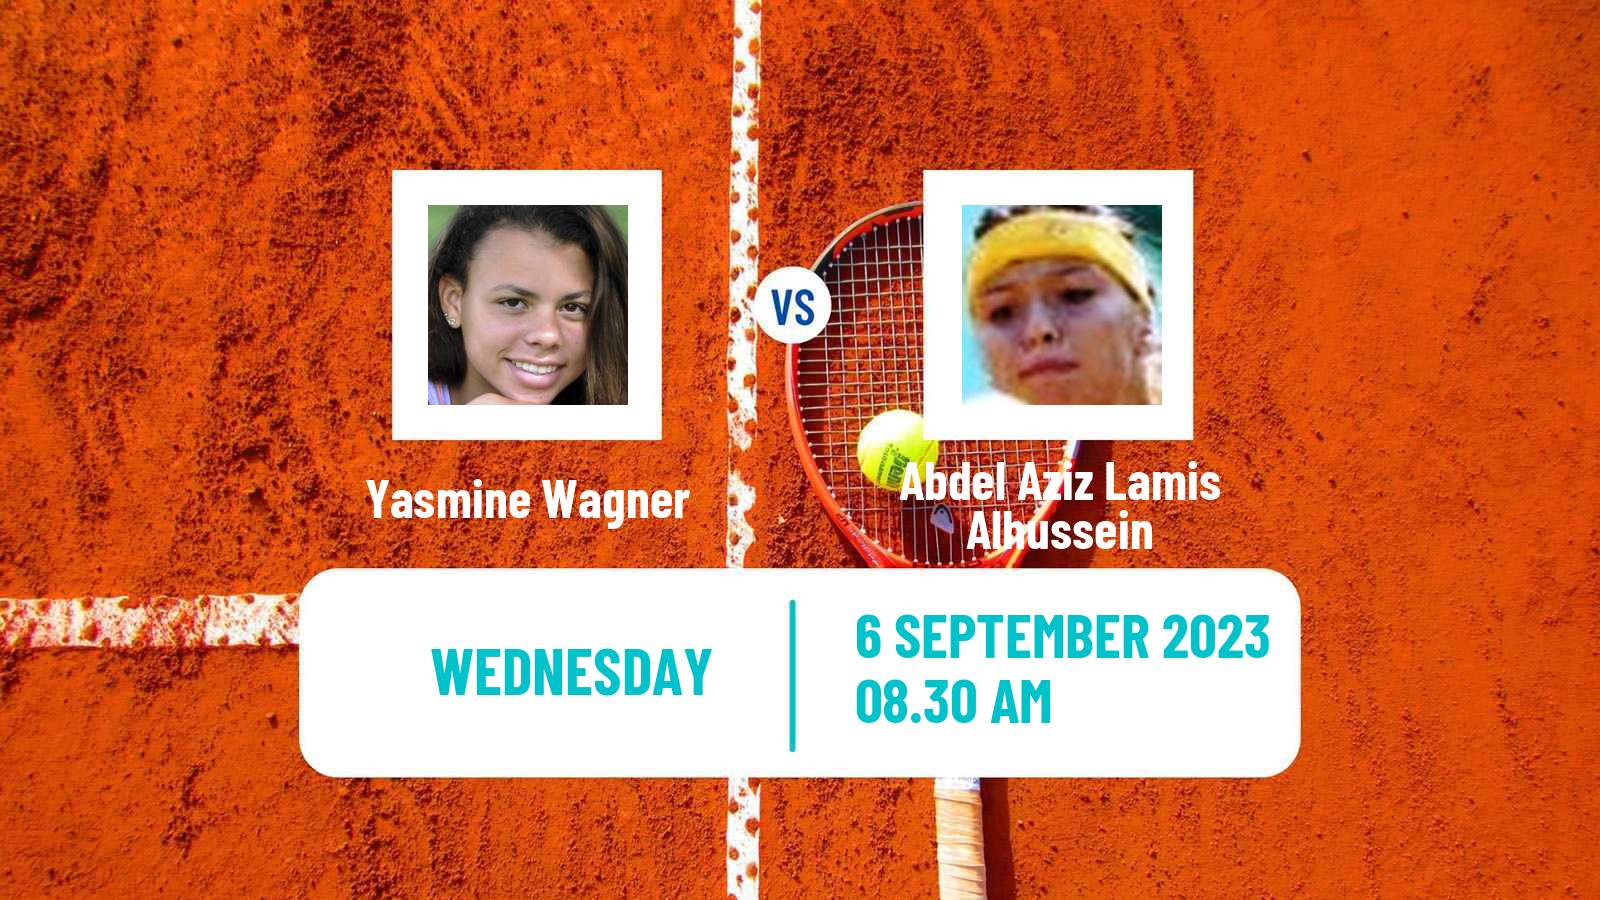 Tennis ITF W15 Monastir 31 Women Yasmine Wagner - Abdel Aziz Lamis Alhussein